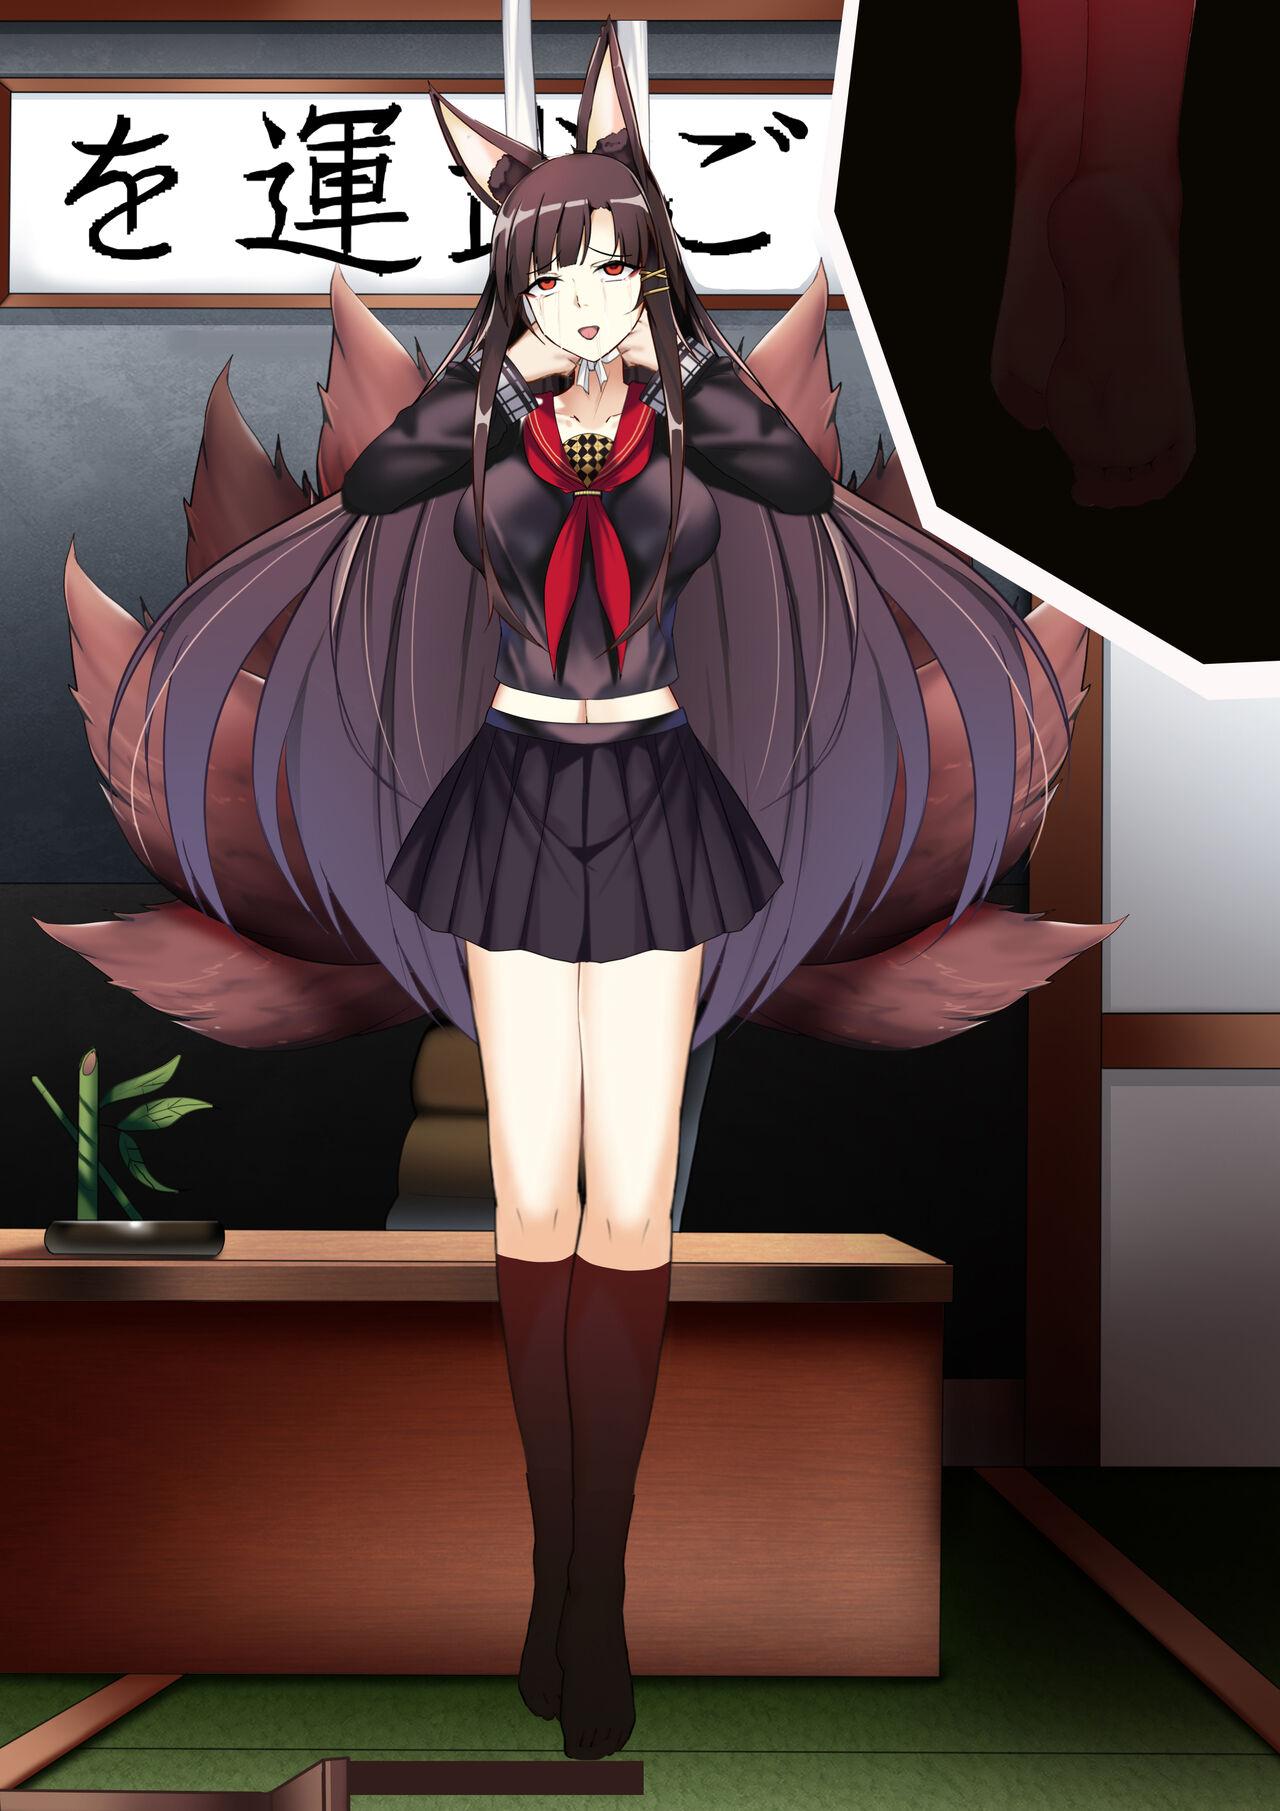 Akagi hanged herself in her office 112